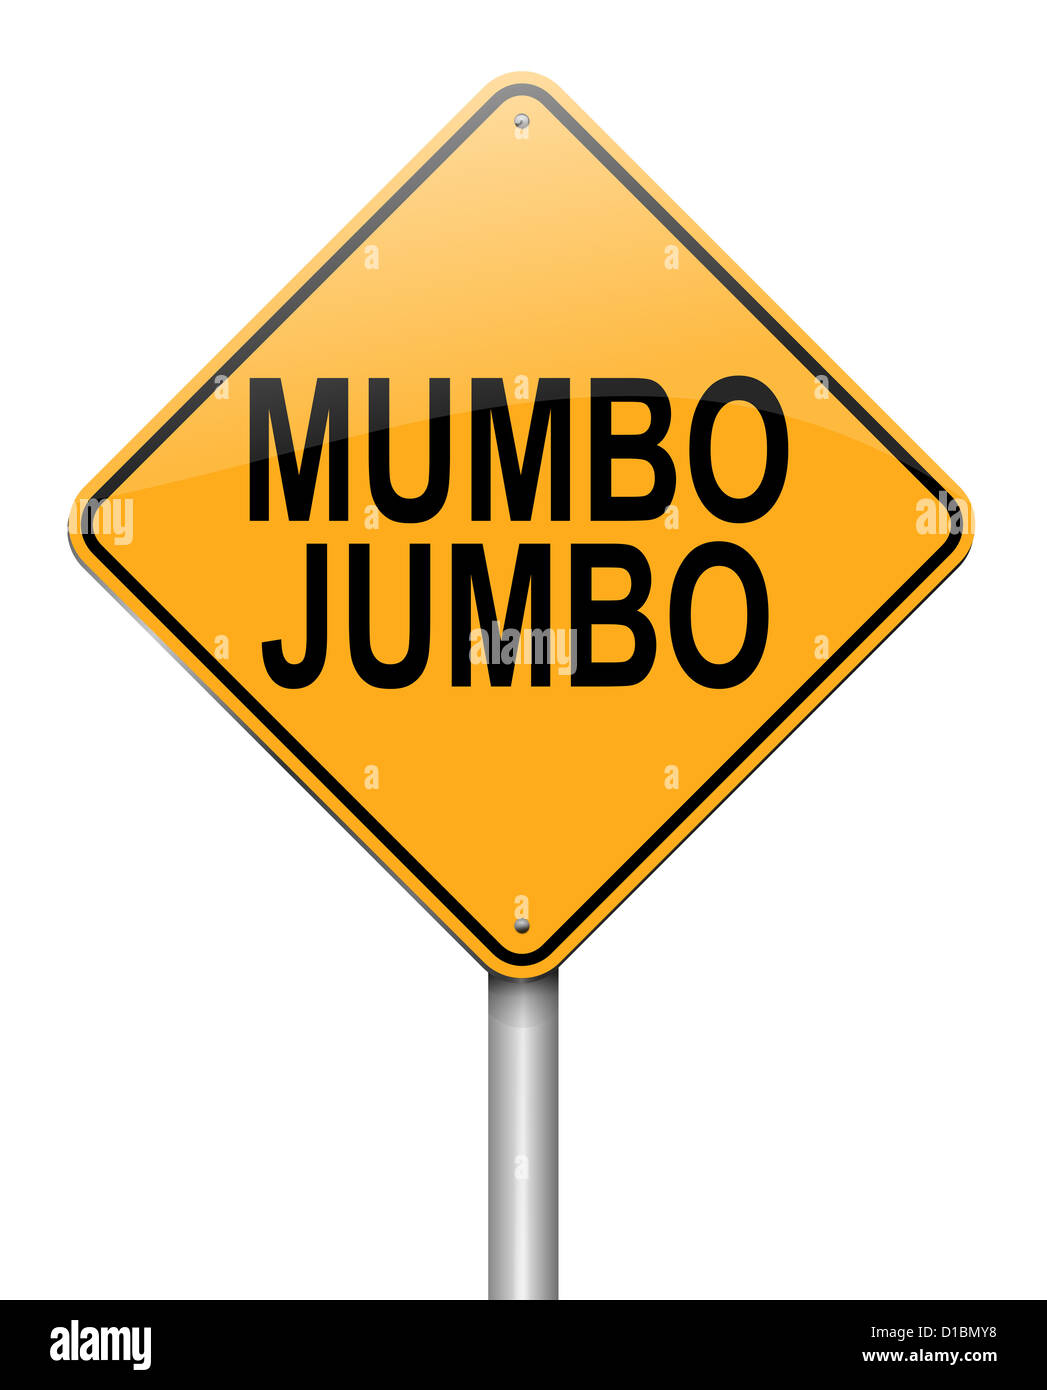 Mumbo jumbo meaning